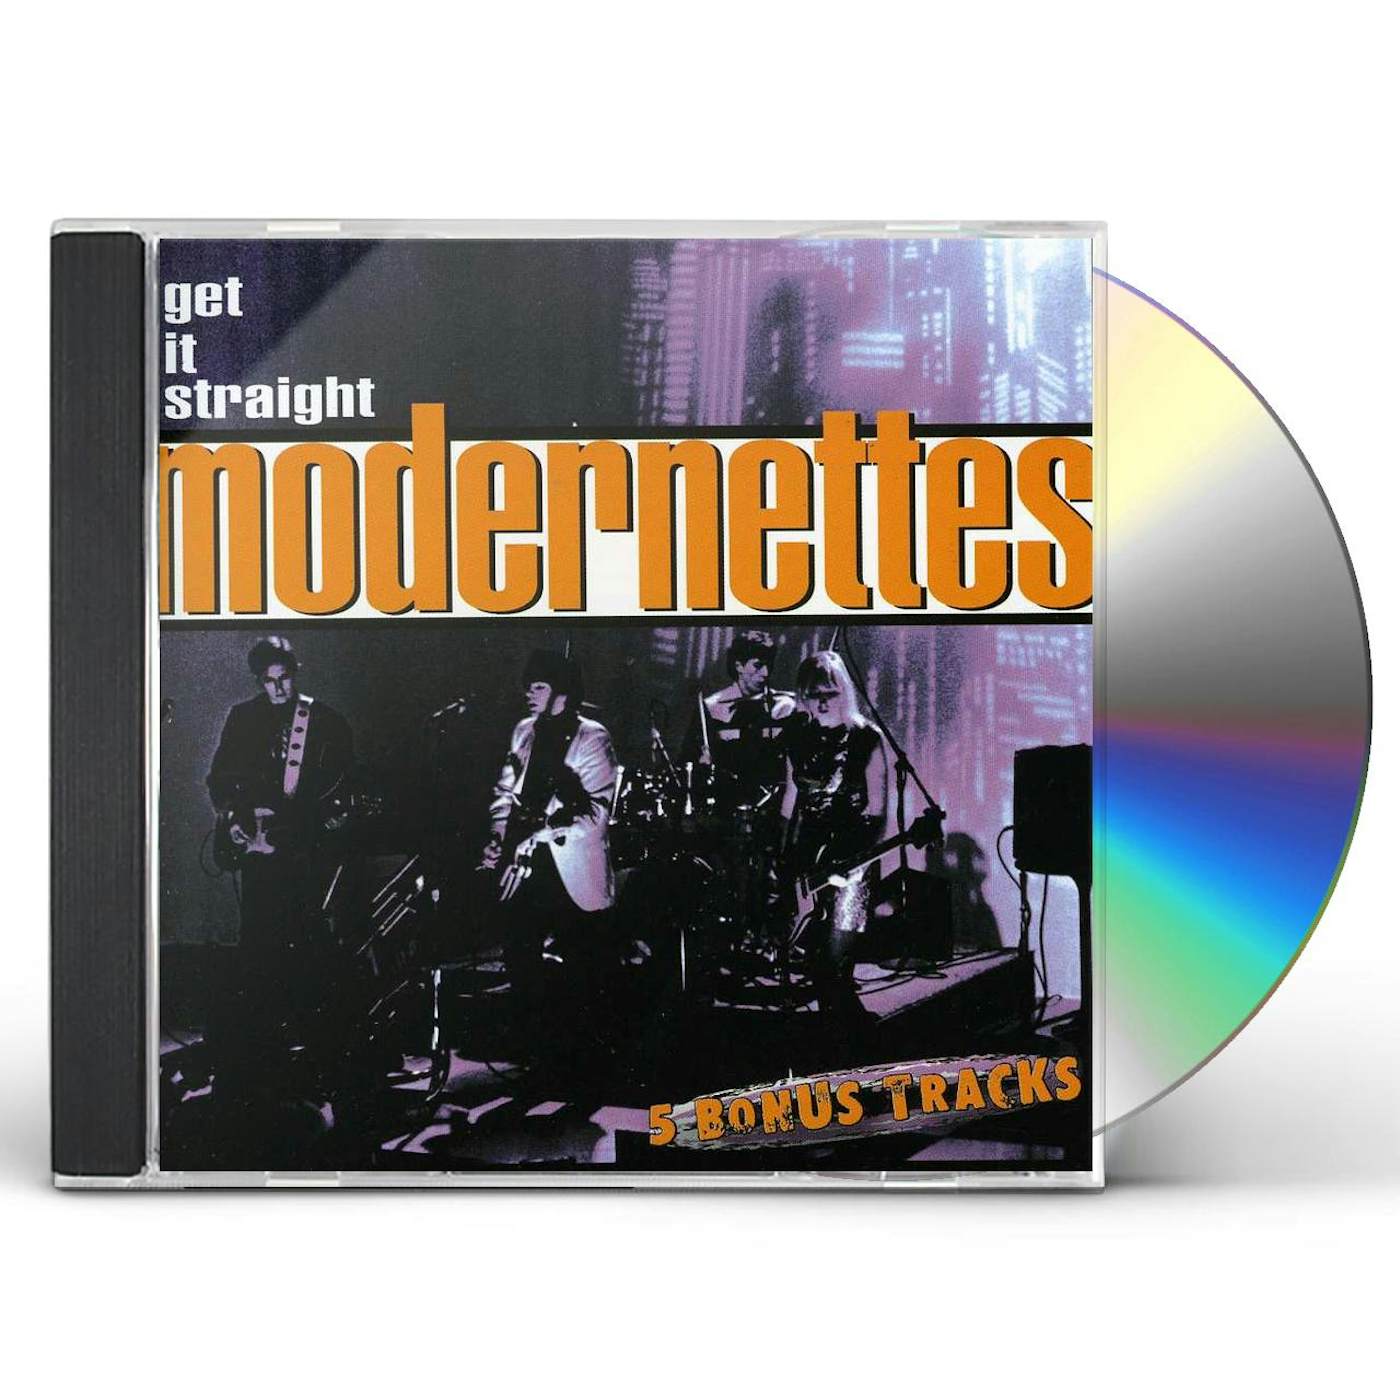 Modernettes GET IT STRAIGHT CD